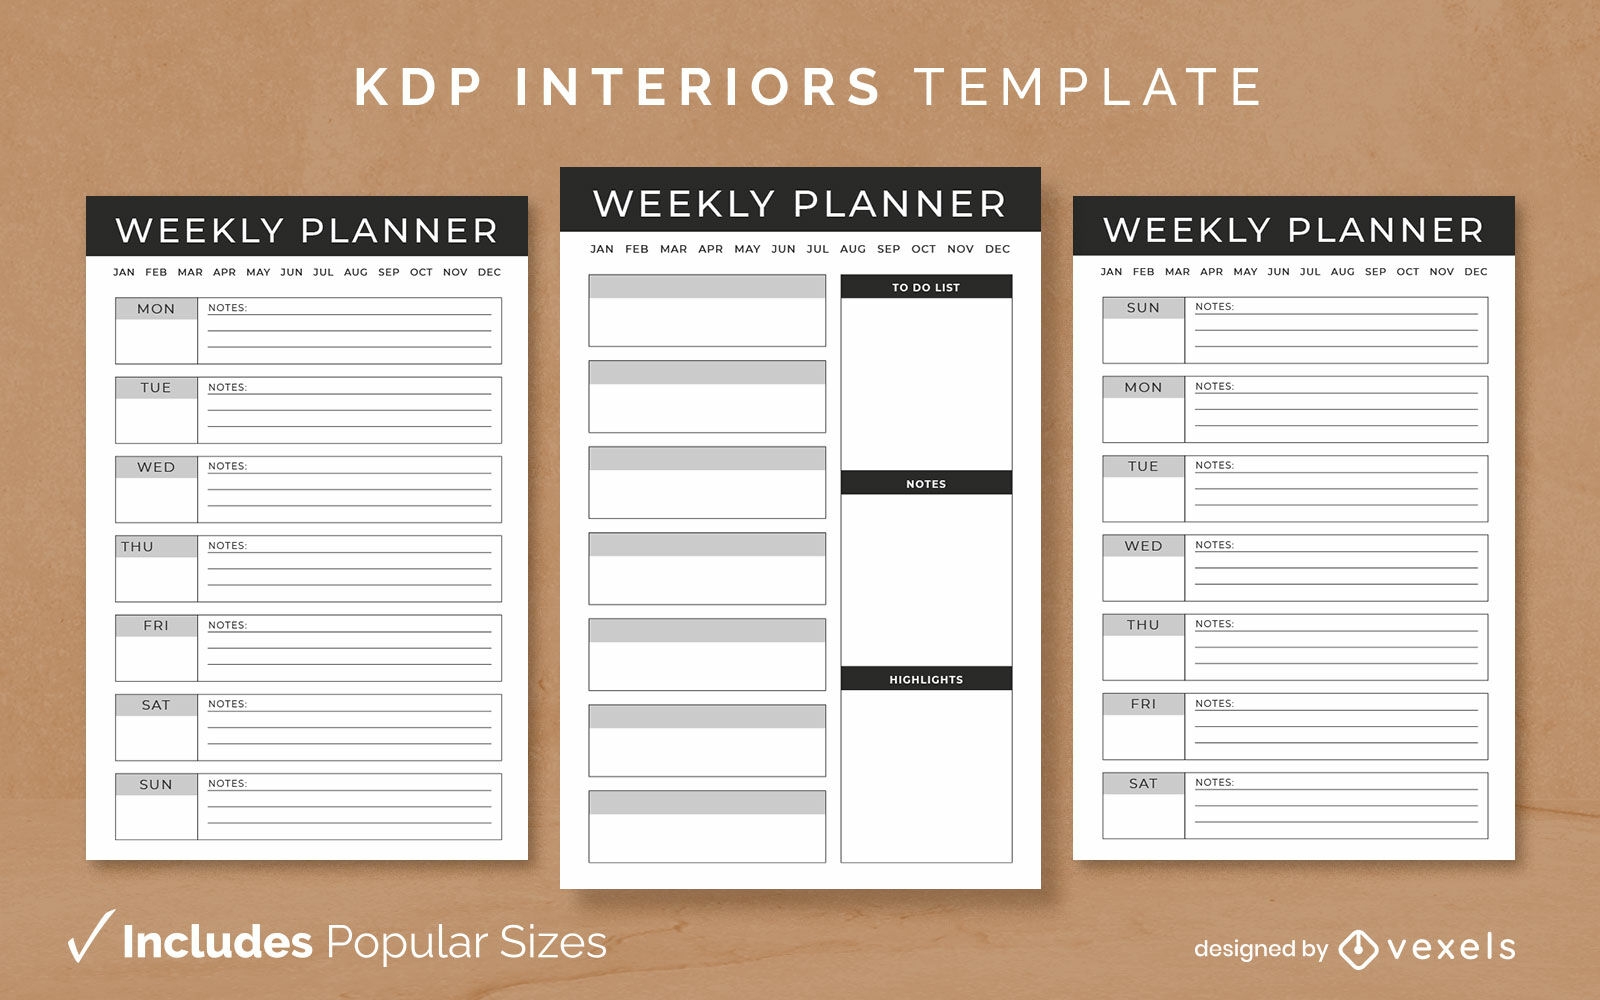 Undated weekly planner KDP interior template design